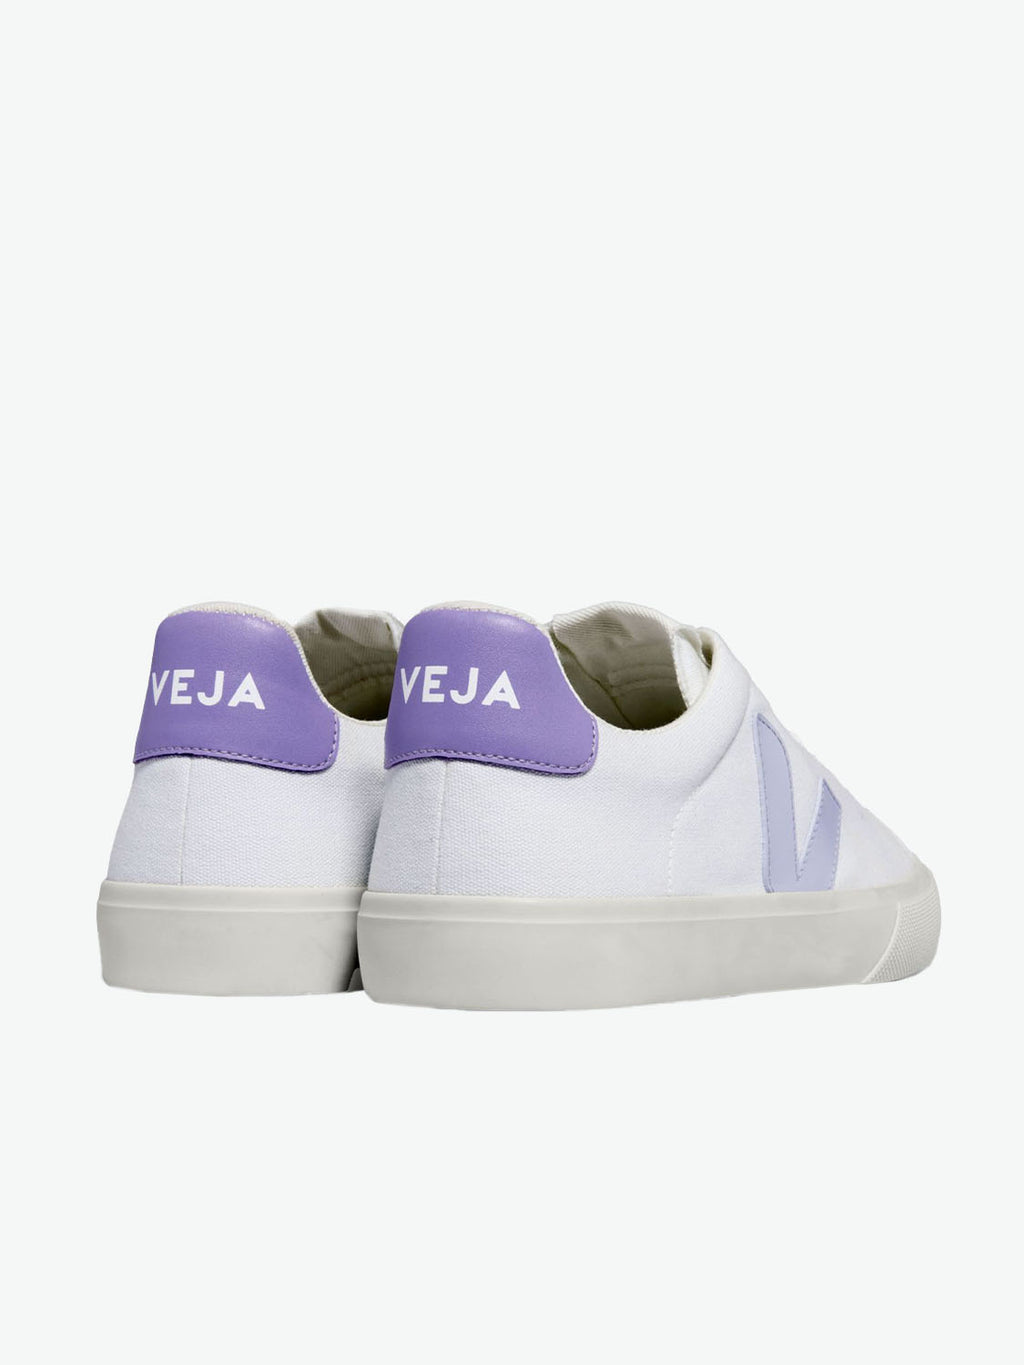 Veja Campo Canvas White Lavender Sneakers